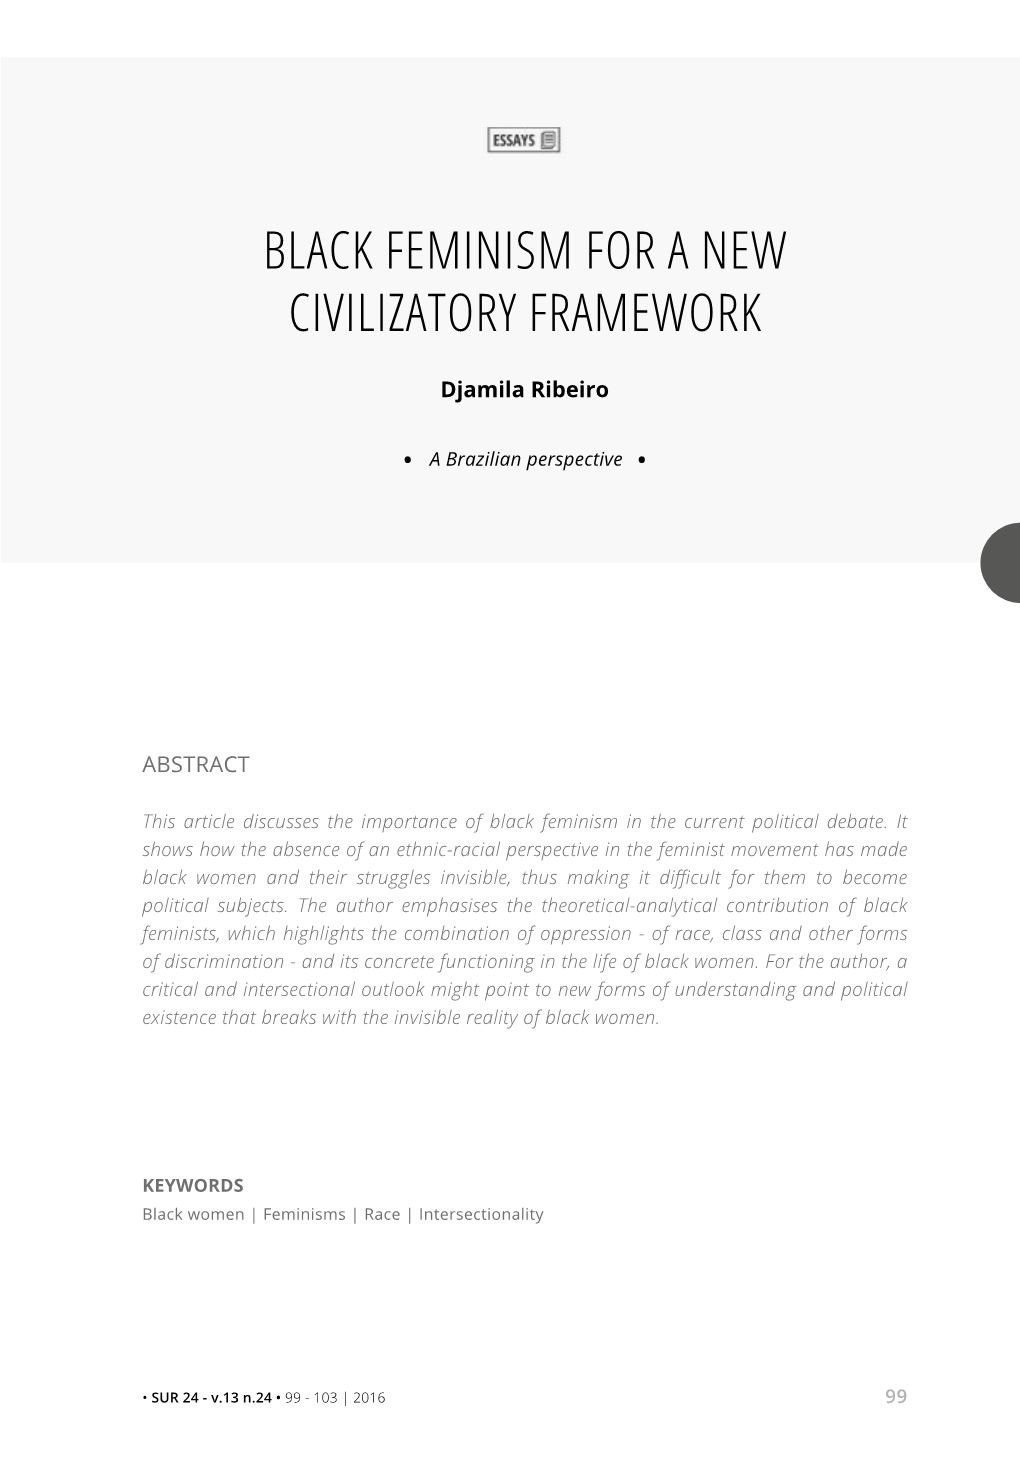 Black Feminism for a New Civilizatory Framework